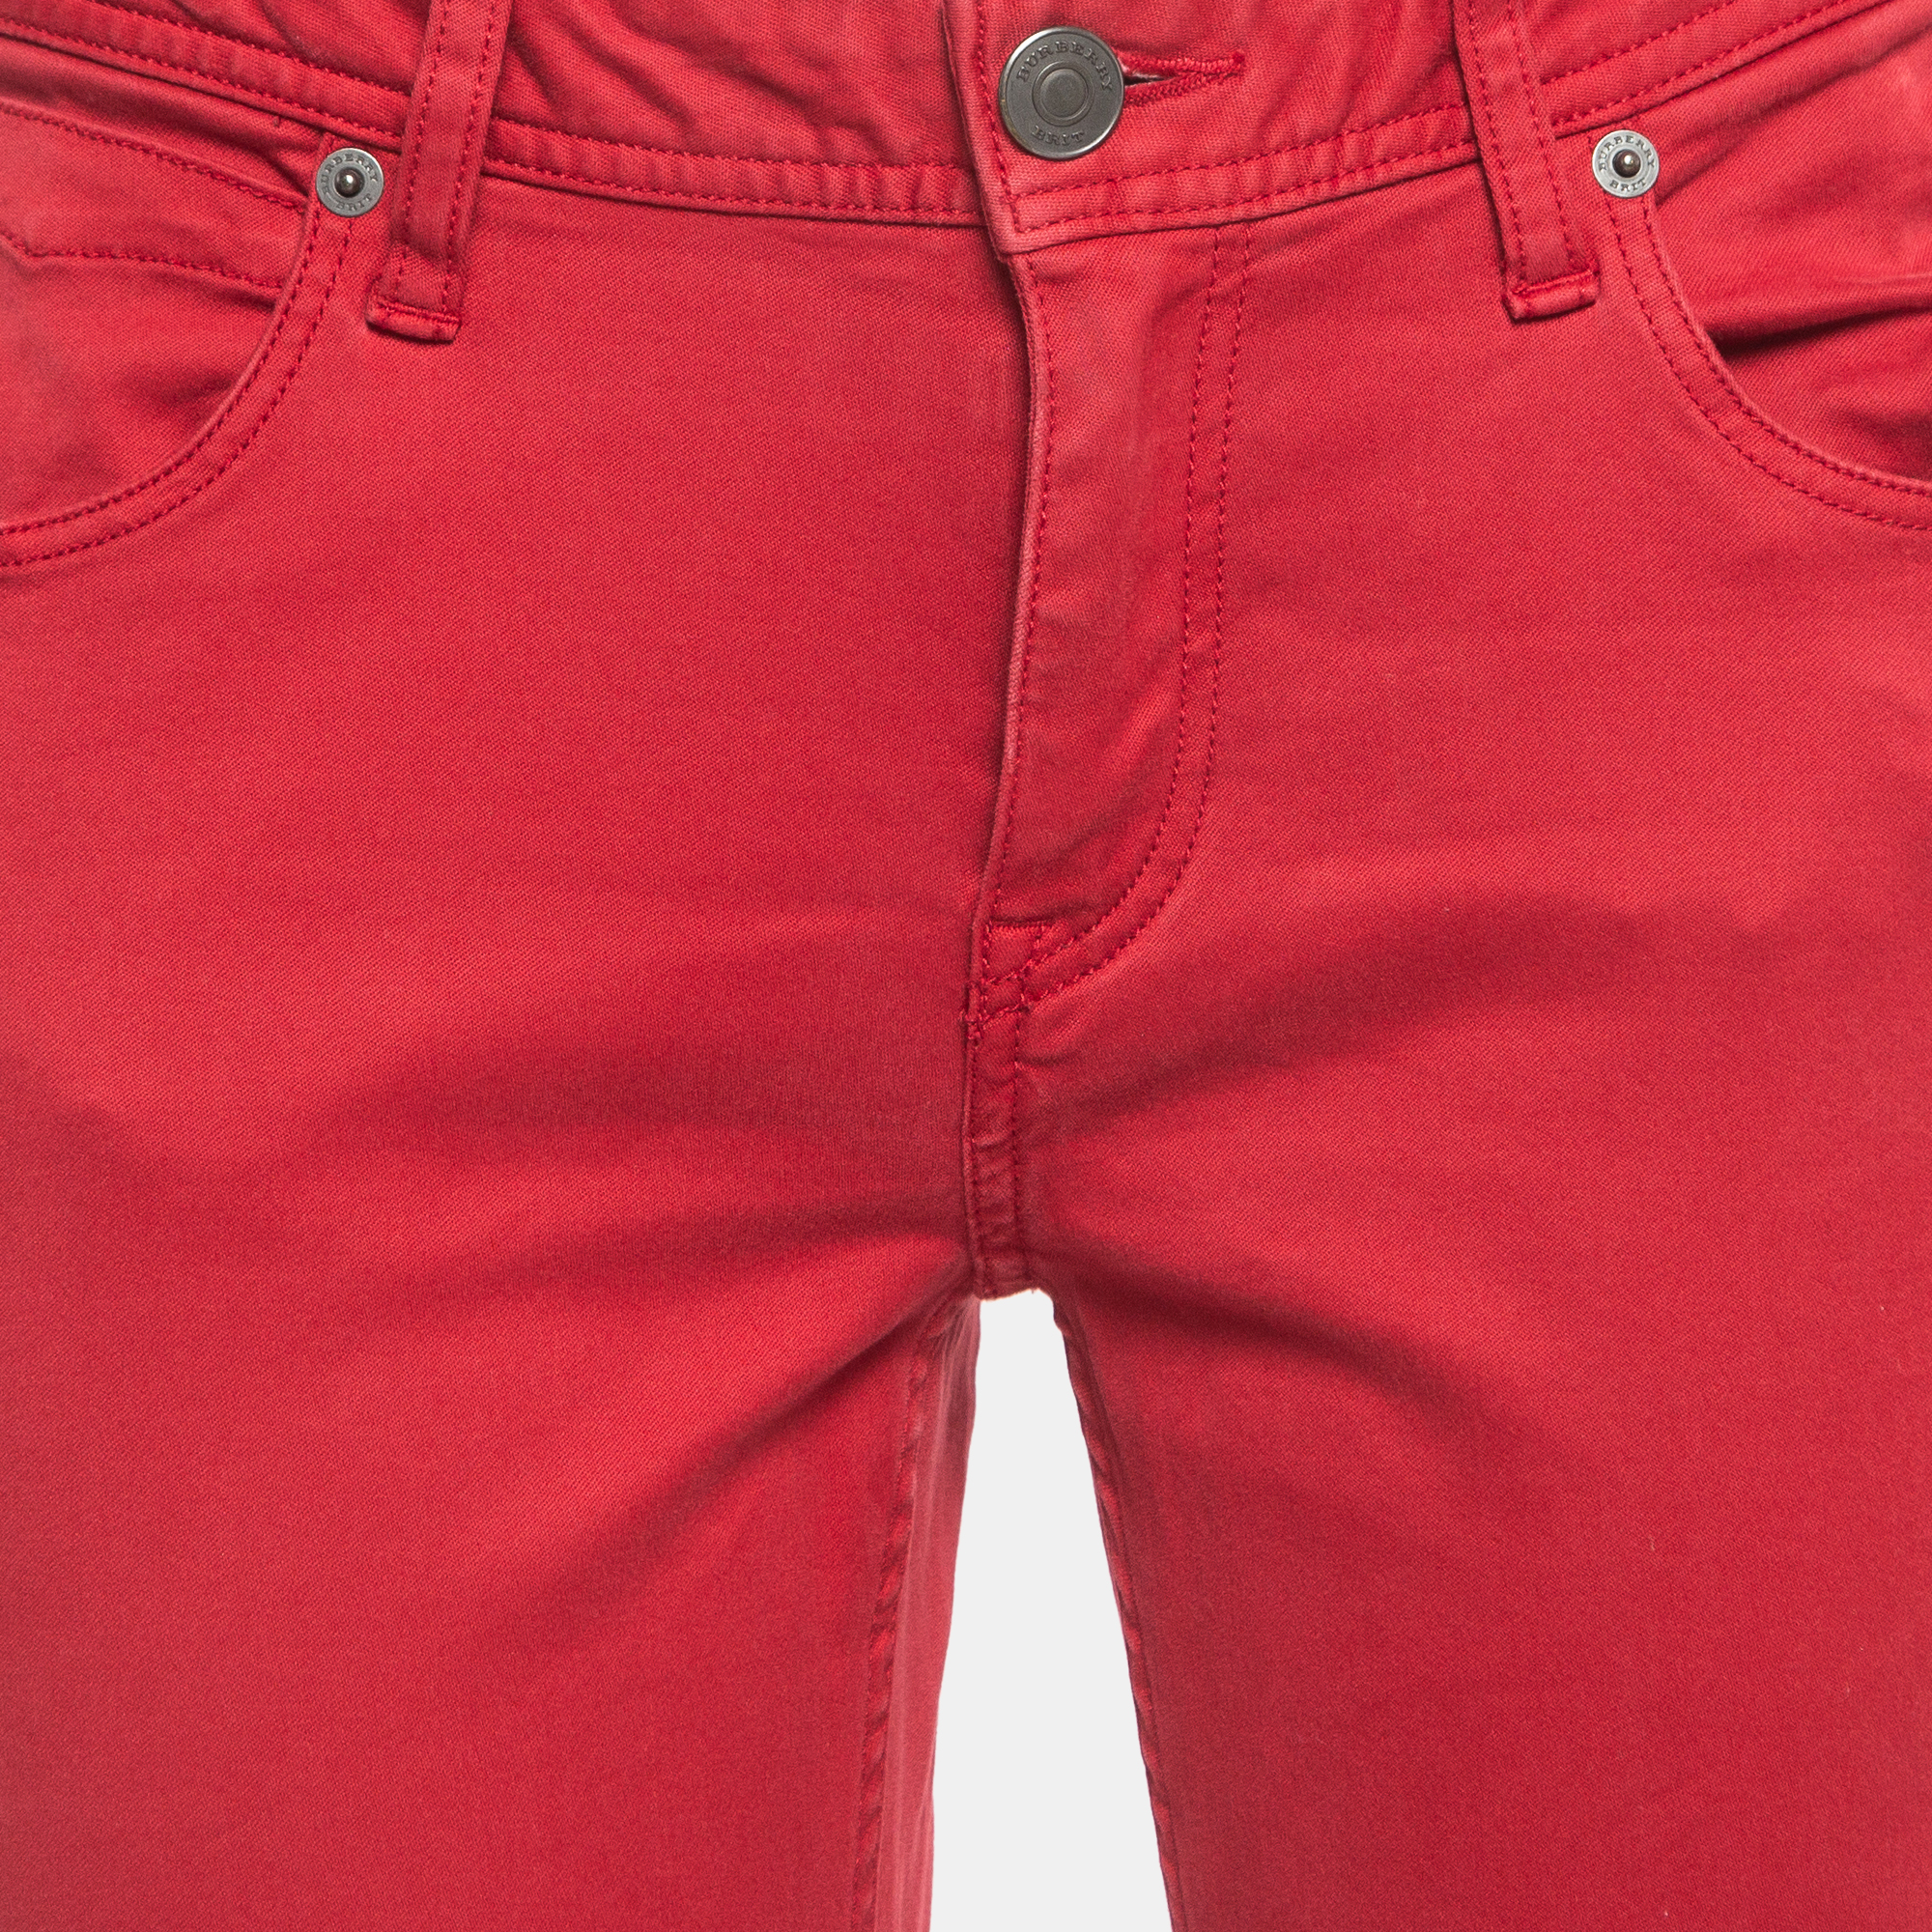 Burberry Brit Red Denim Foxton Skinny Jeans M Waist 29